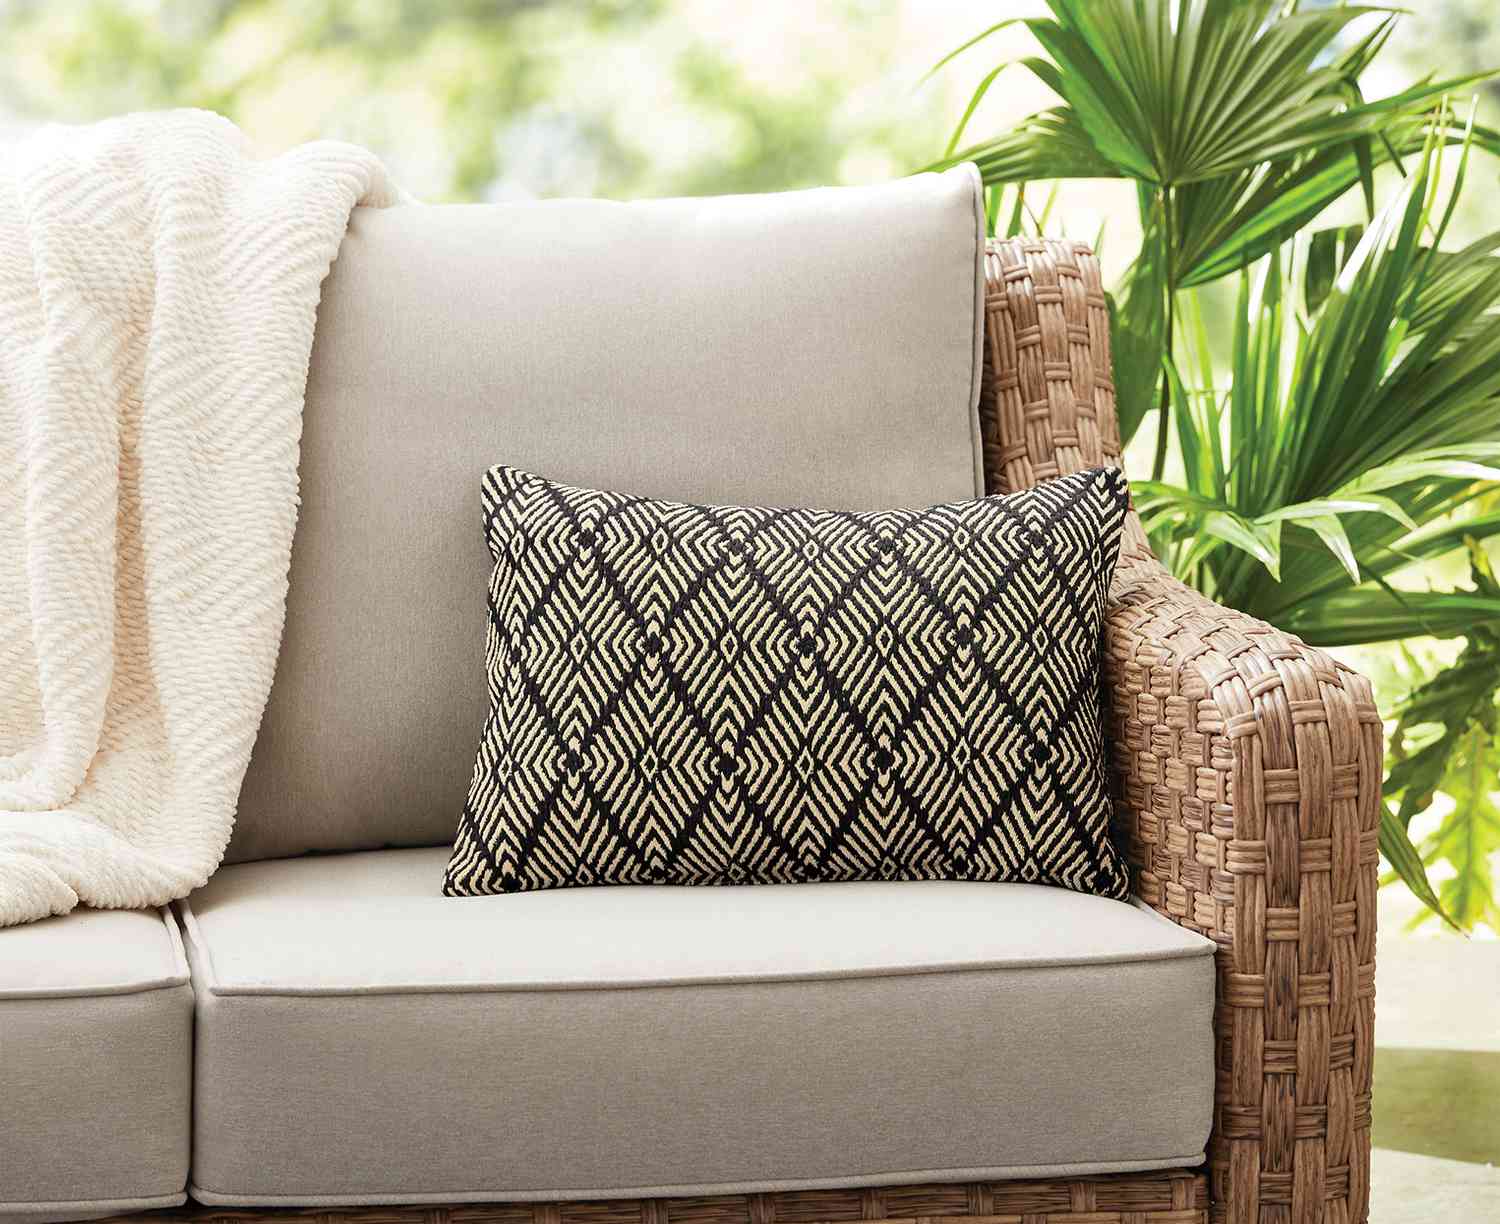 Outdoor Pillows To Spruce Up Your Patio, Designer Outdoor Throw Pillows